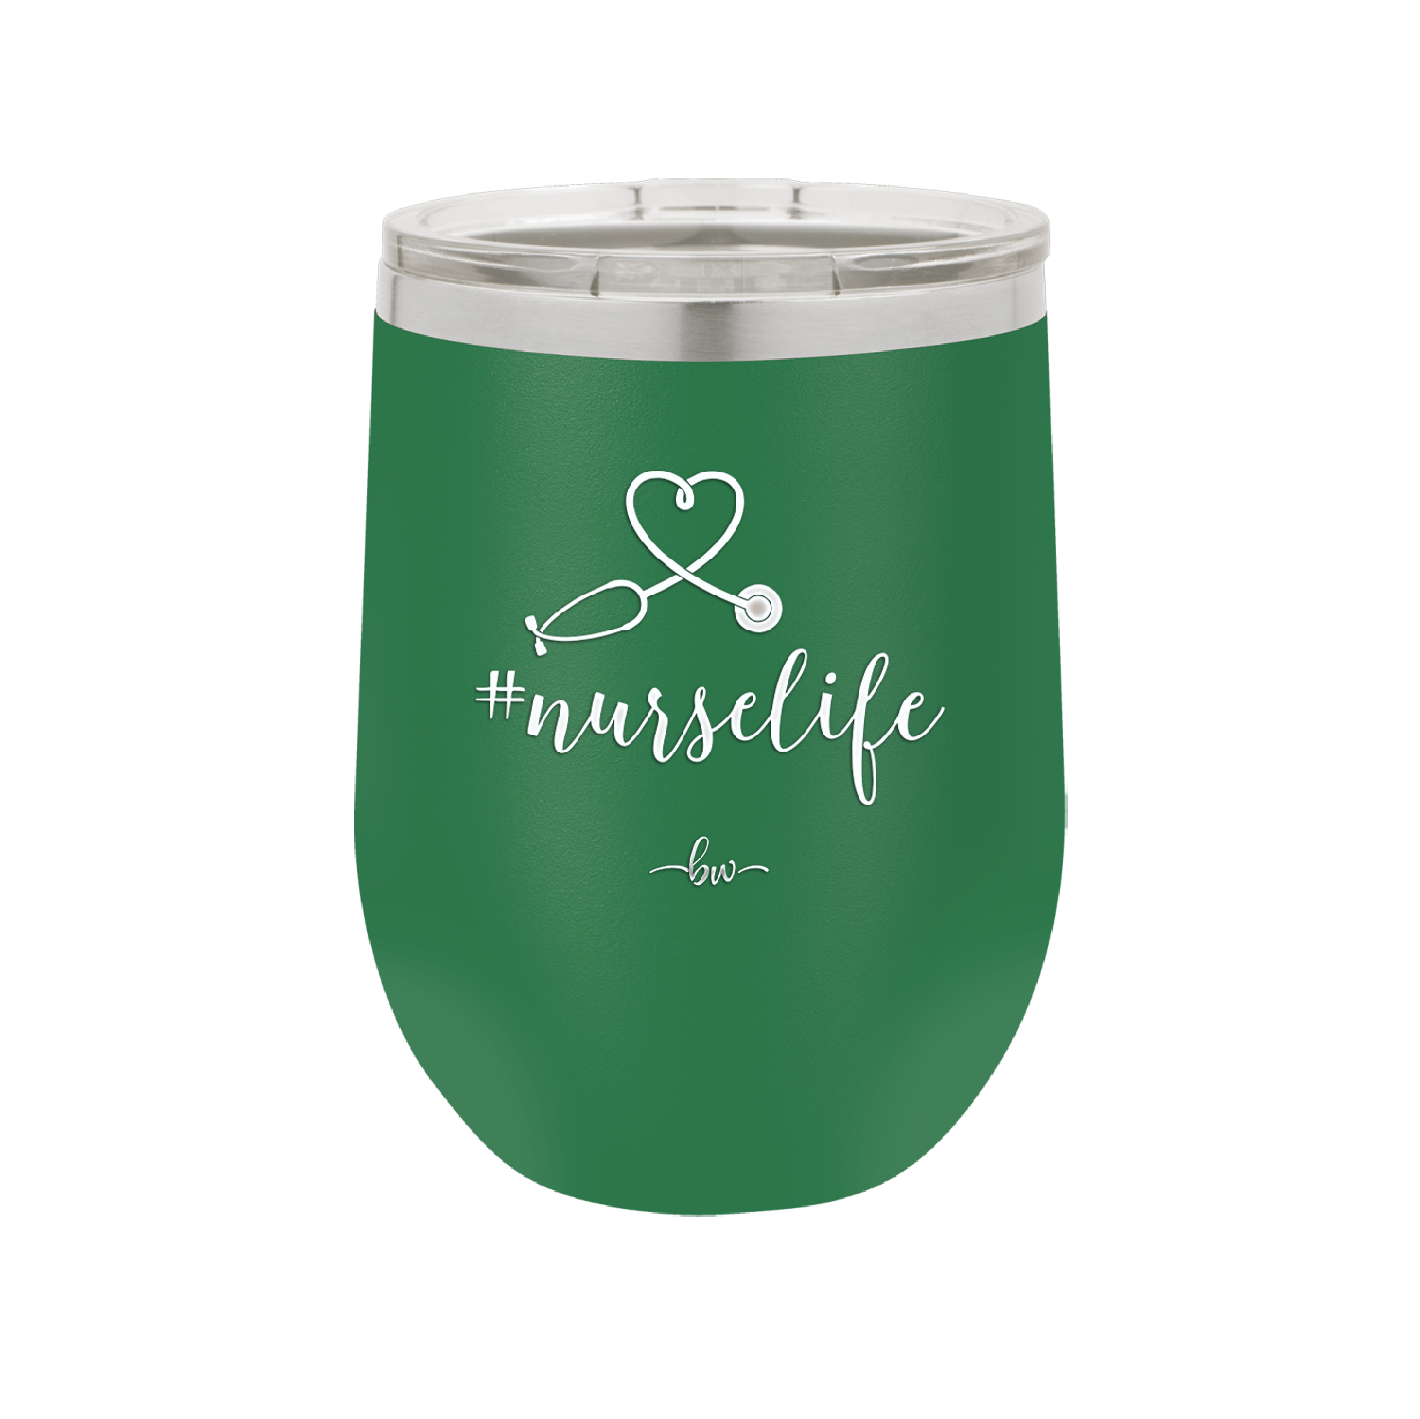 12 oz #nurselife wine cup - green